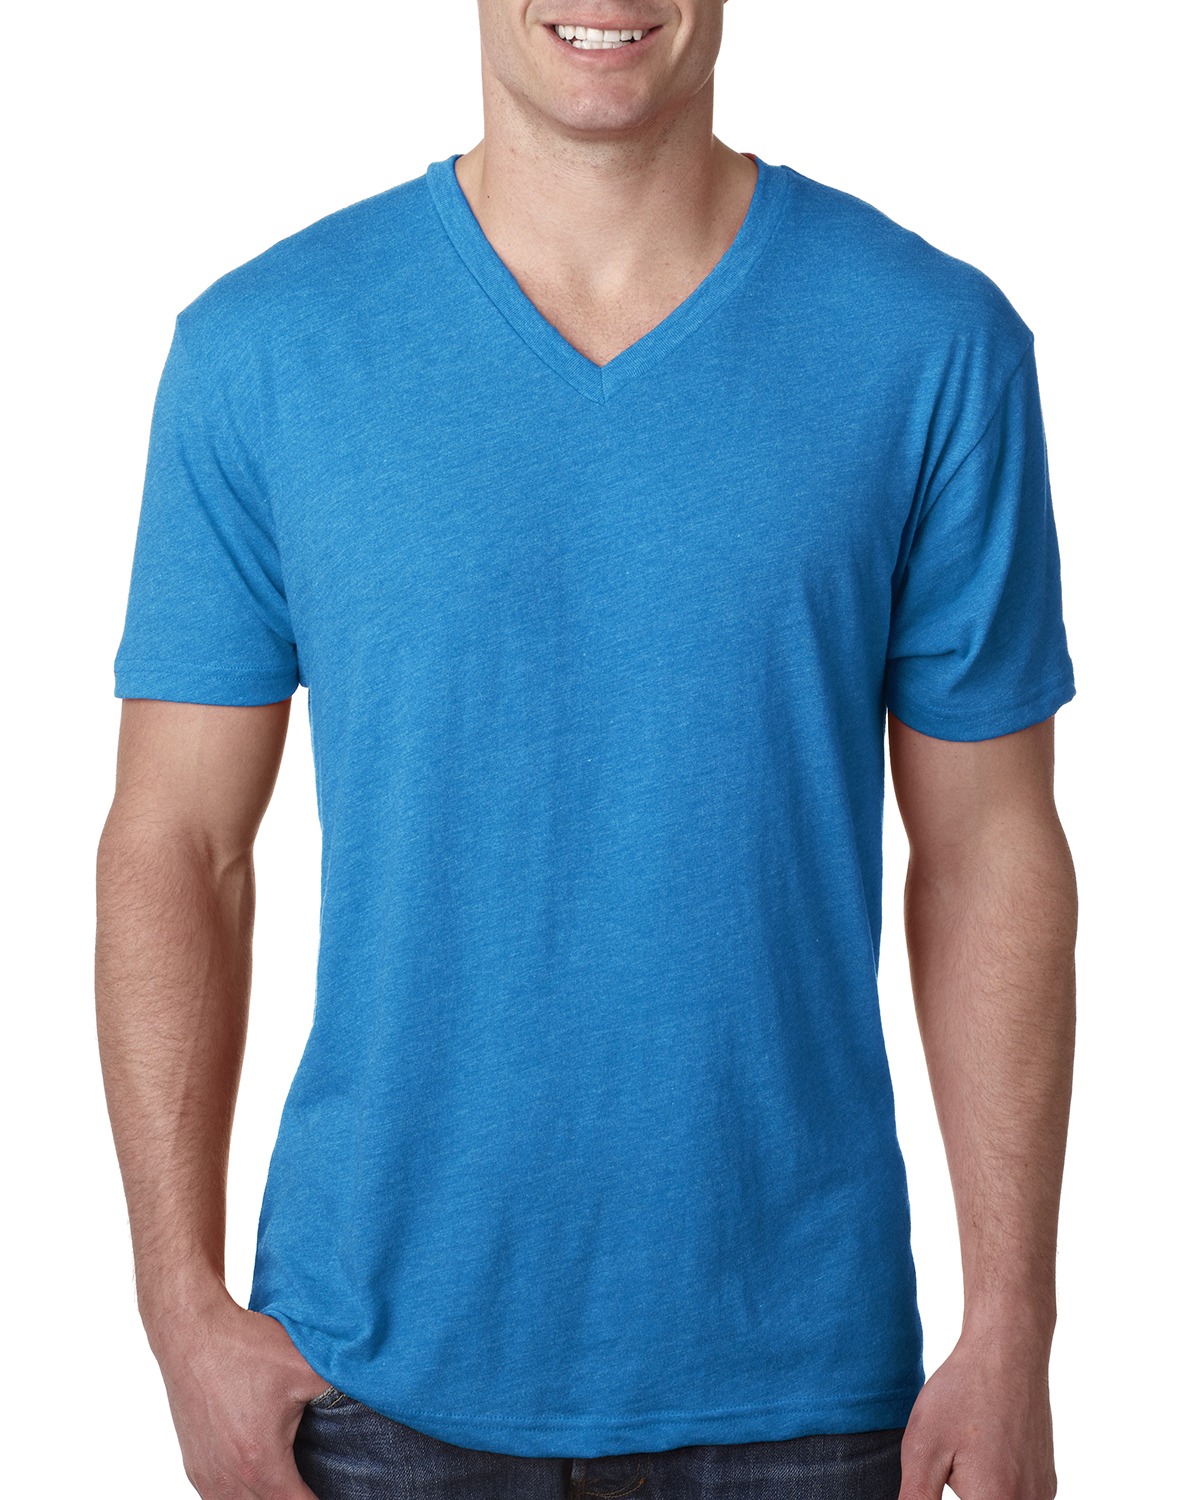 Next Level 6040 - Triblend Short Sleeve V $6.54 - T-Shirts